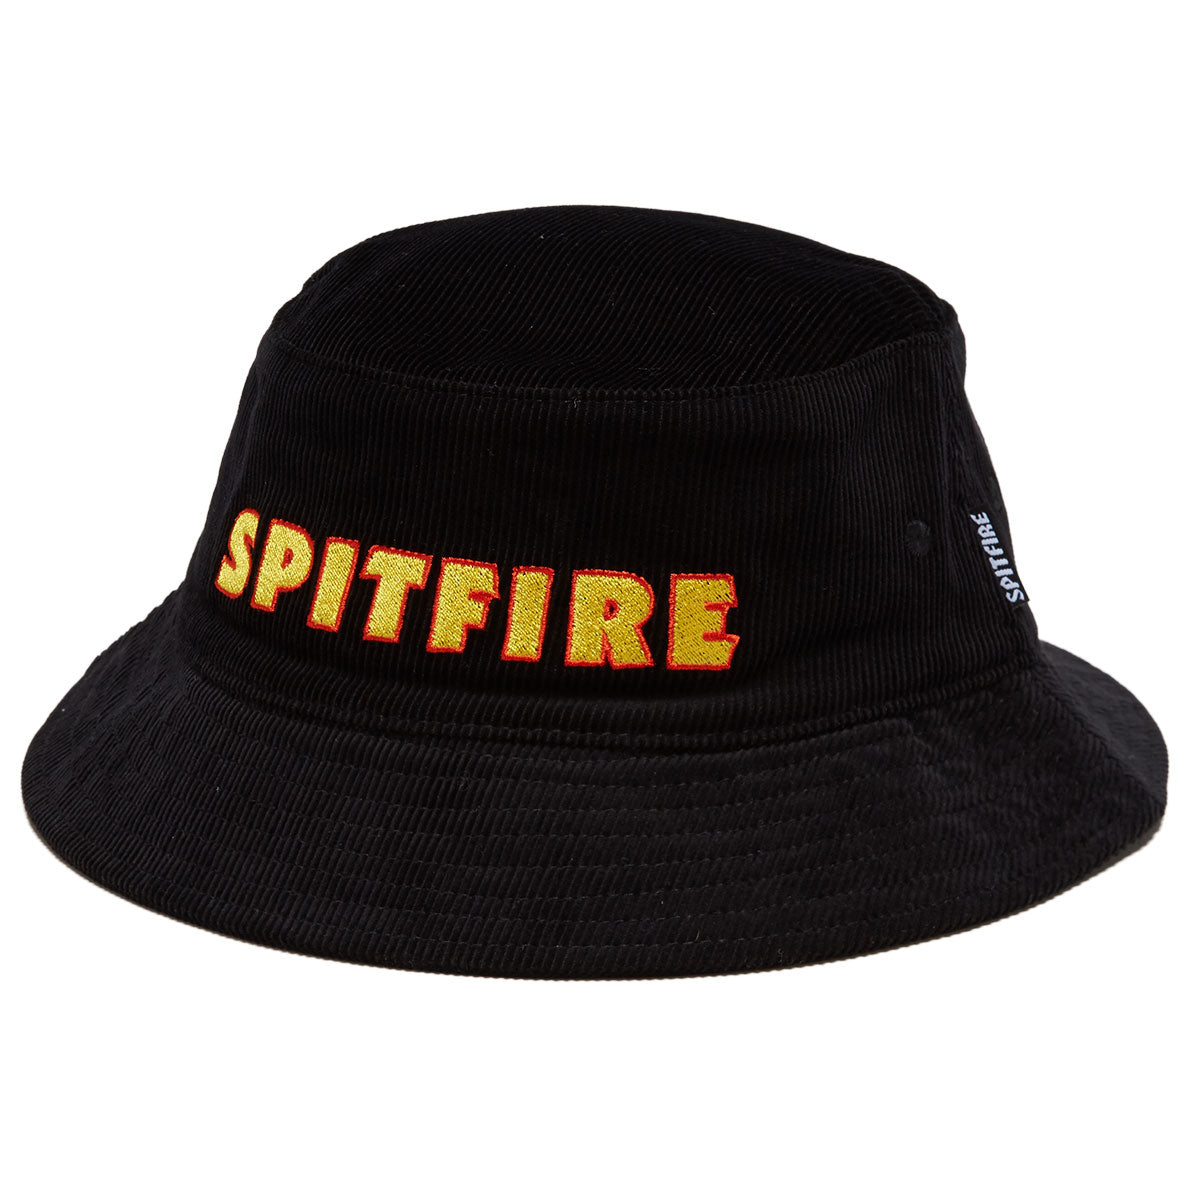 Spitfire Ltb Script Bucket Hat - Black image 1